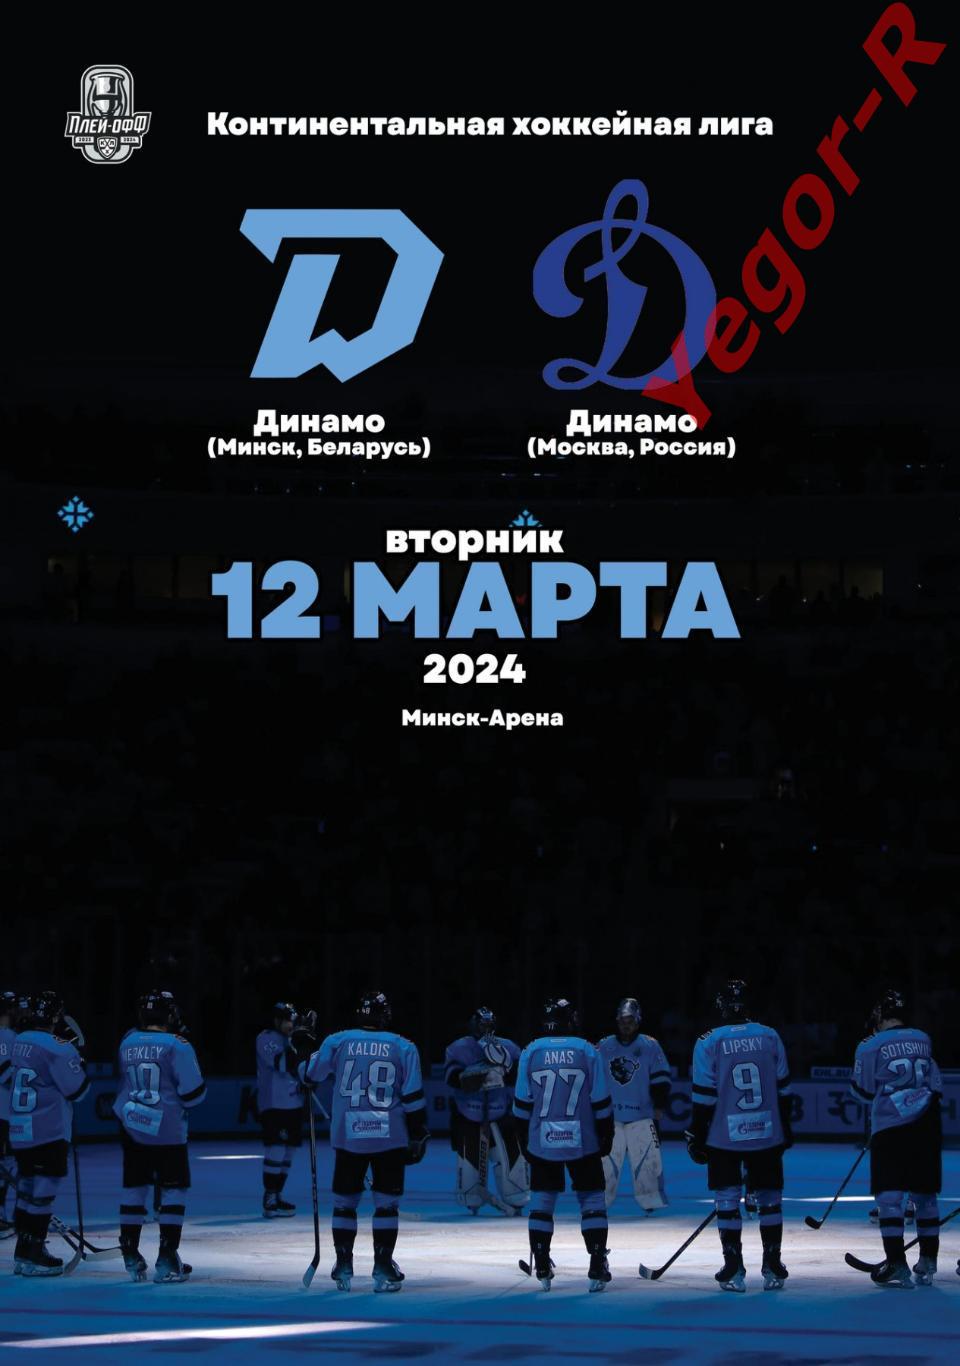 ДИНАМО Минск Беларусь - ДИНАМО Москва Россия 12 марта 2024 КХЛ